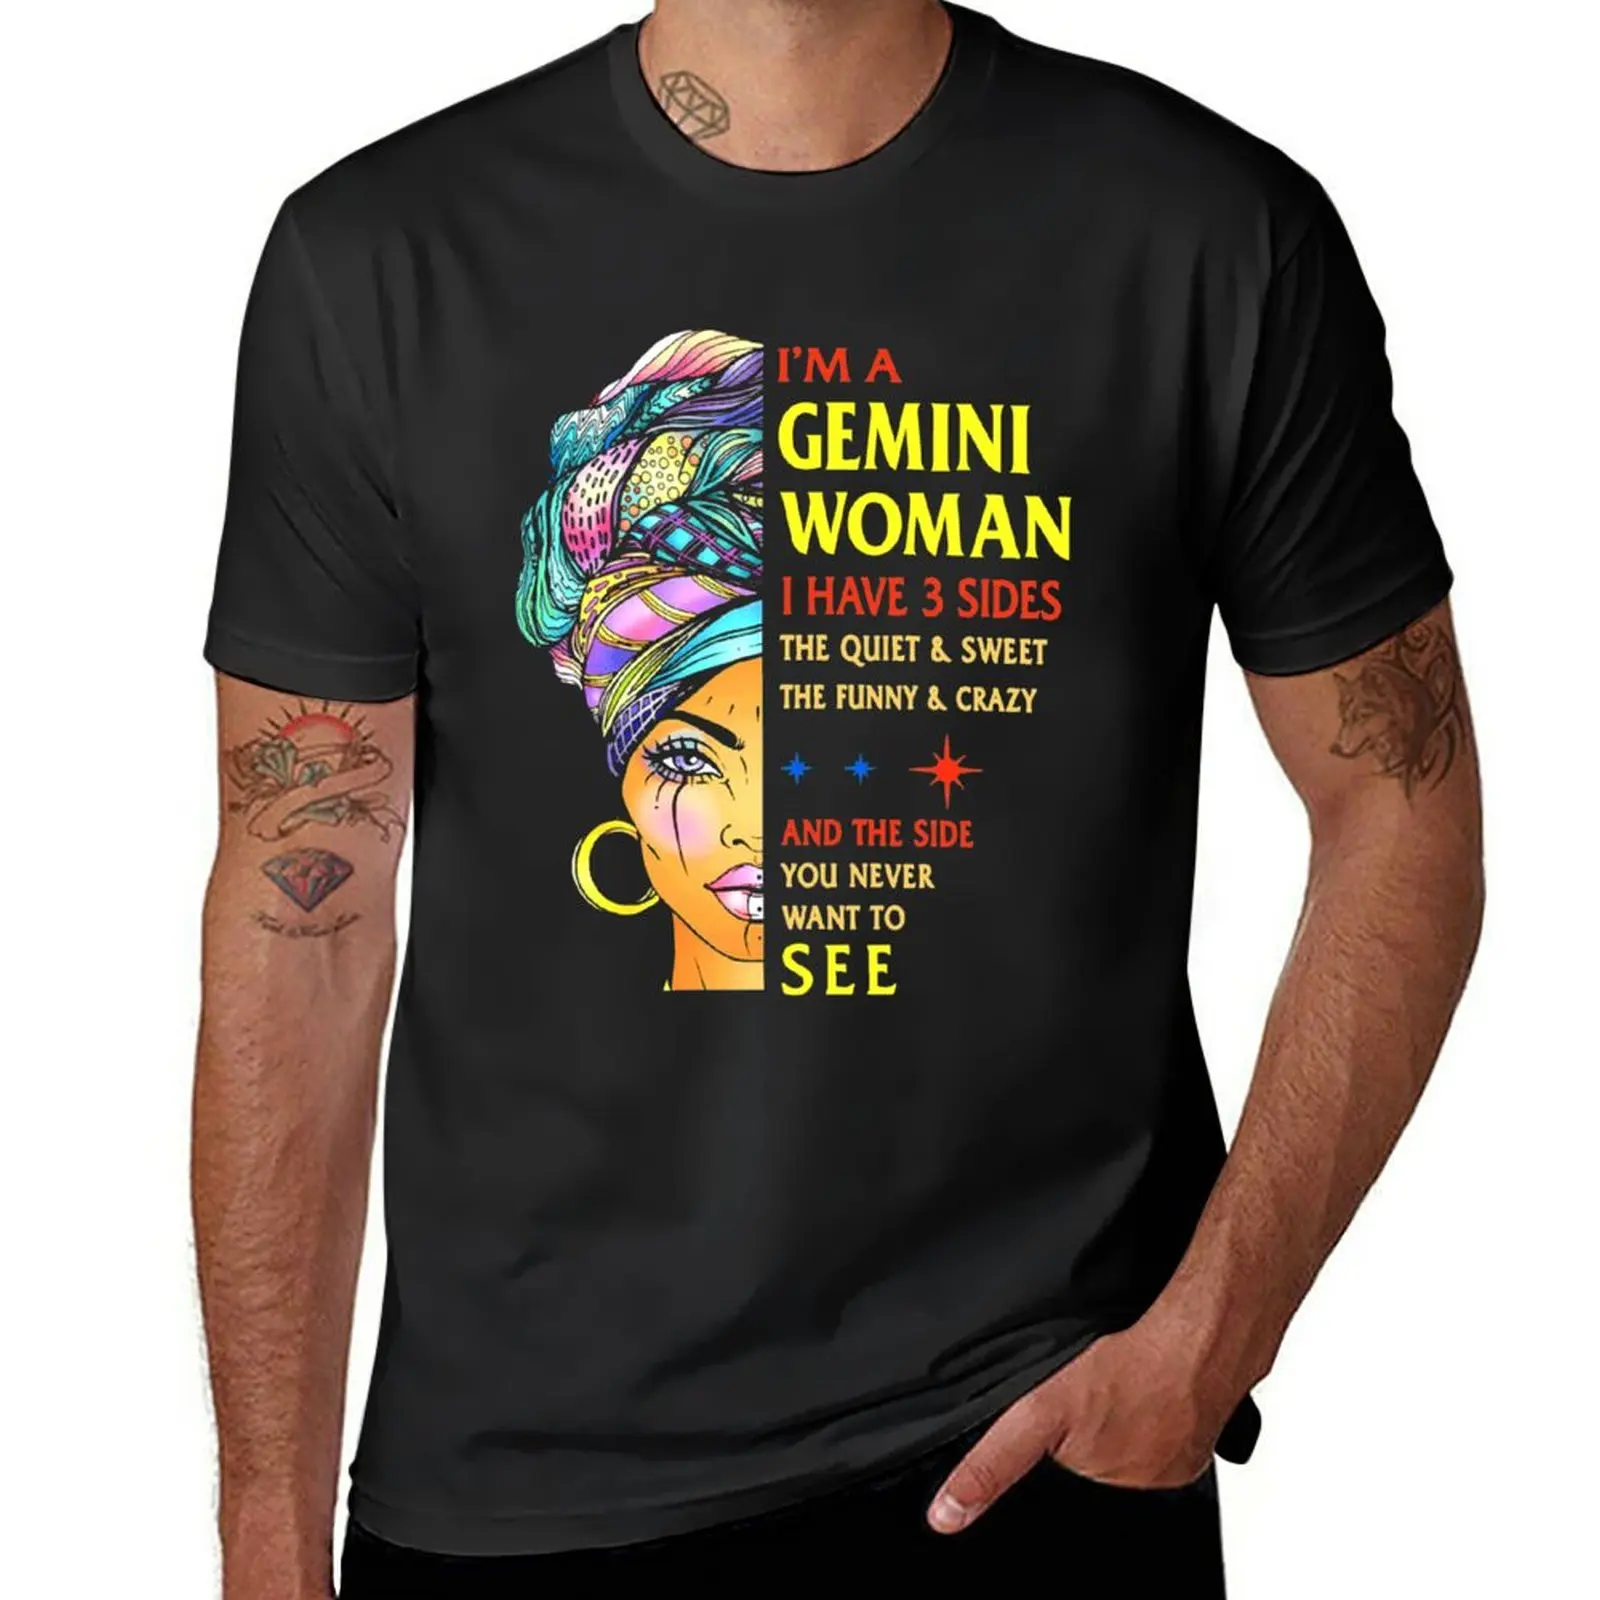 

Gemini woman i have 3 sides Gemini Zodiac gifts shirt T-Shirt vintage clothes graphics t shirt Short sleeve tee men